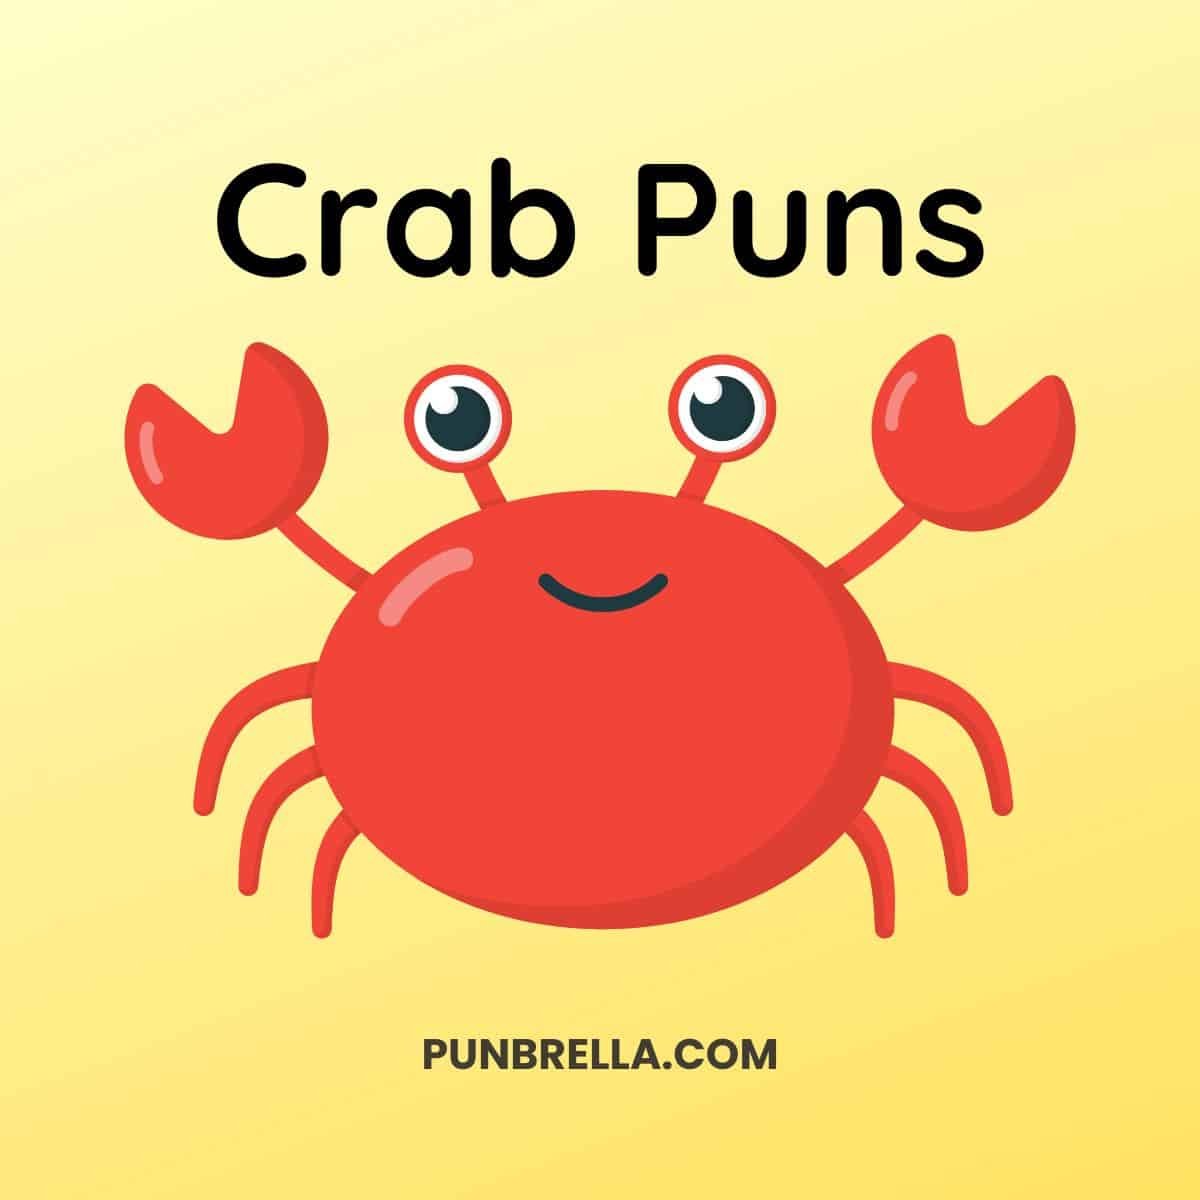 Crab Puns - Cute red cartoon crab